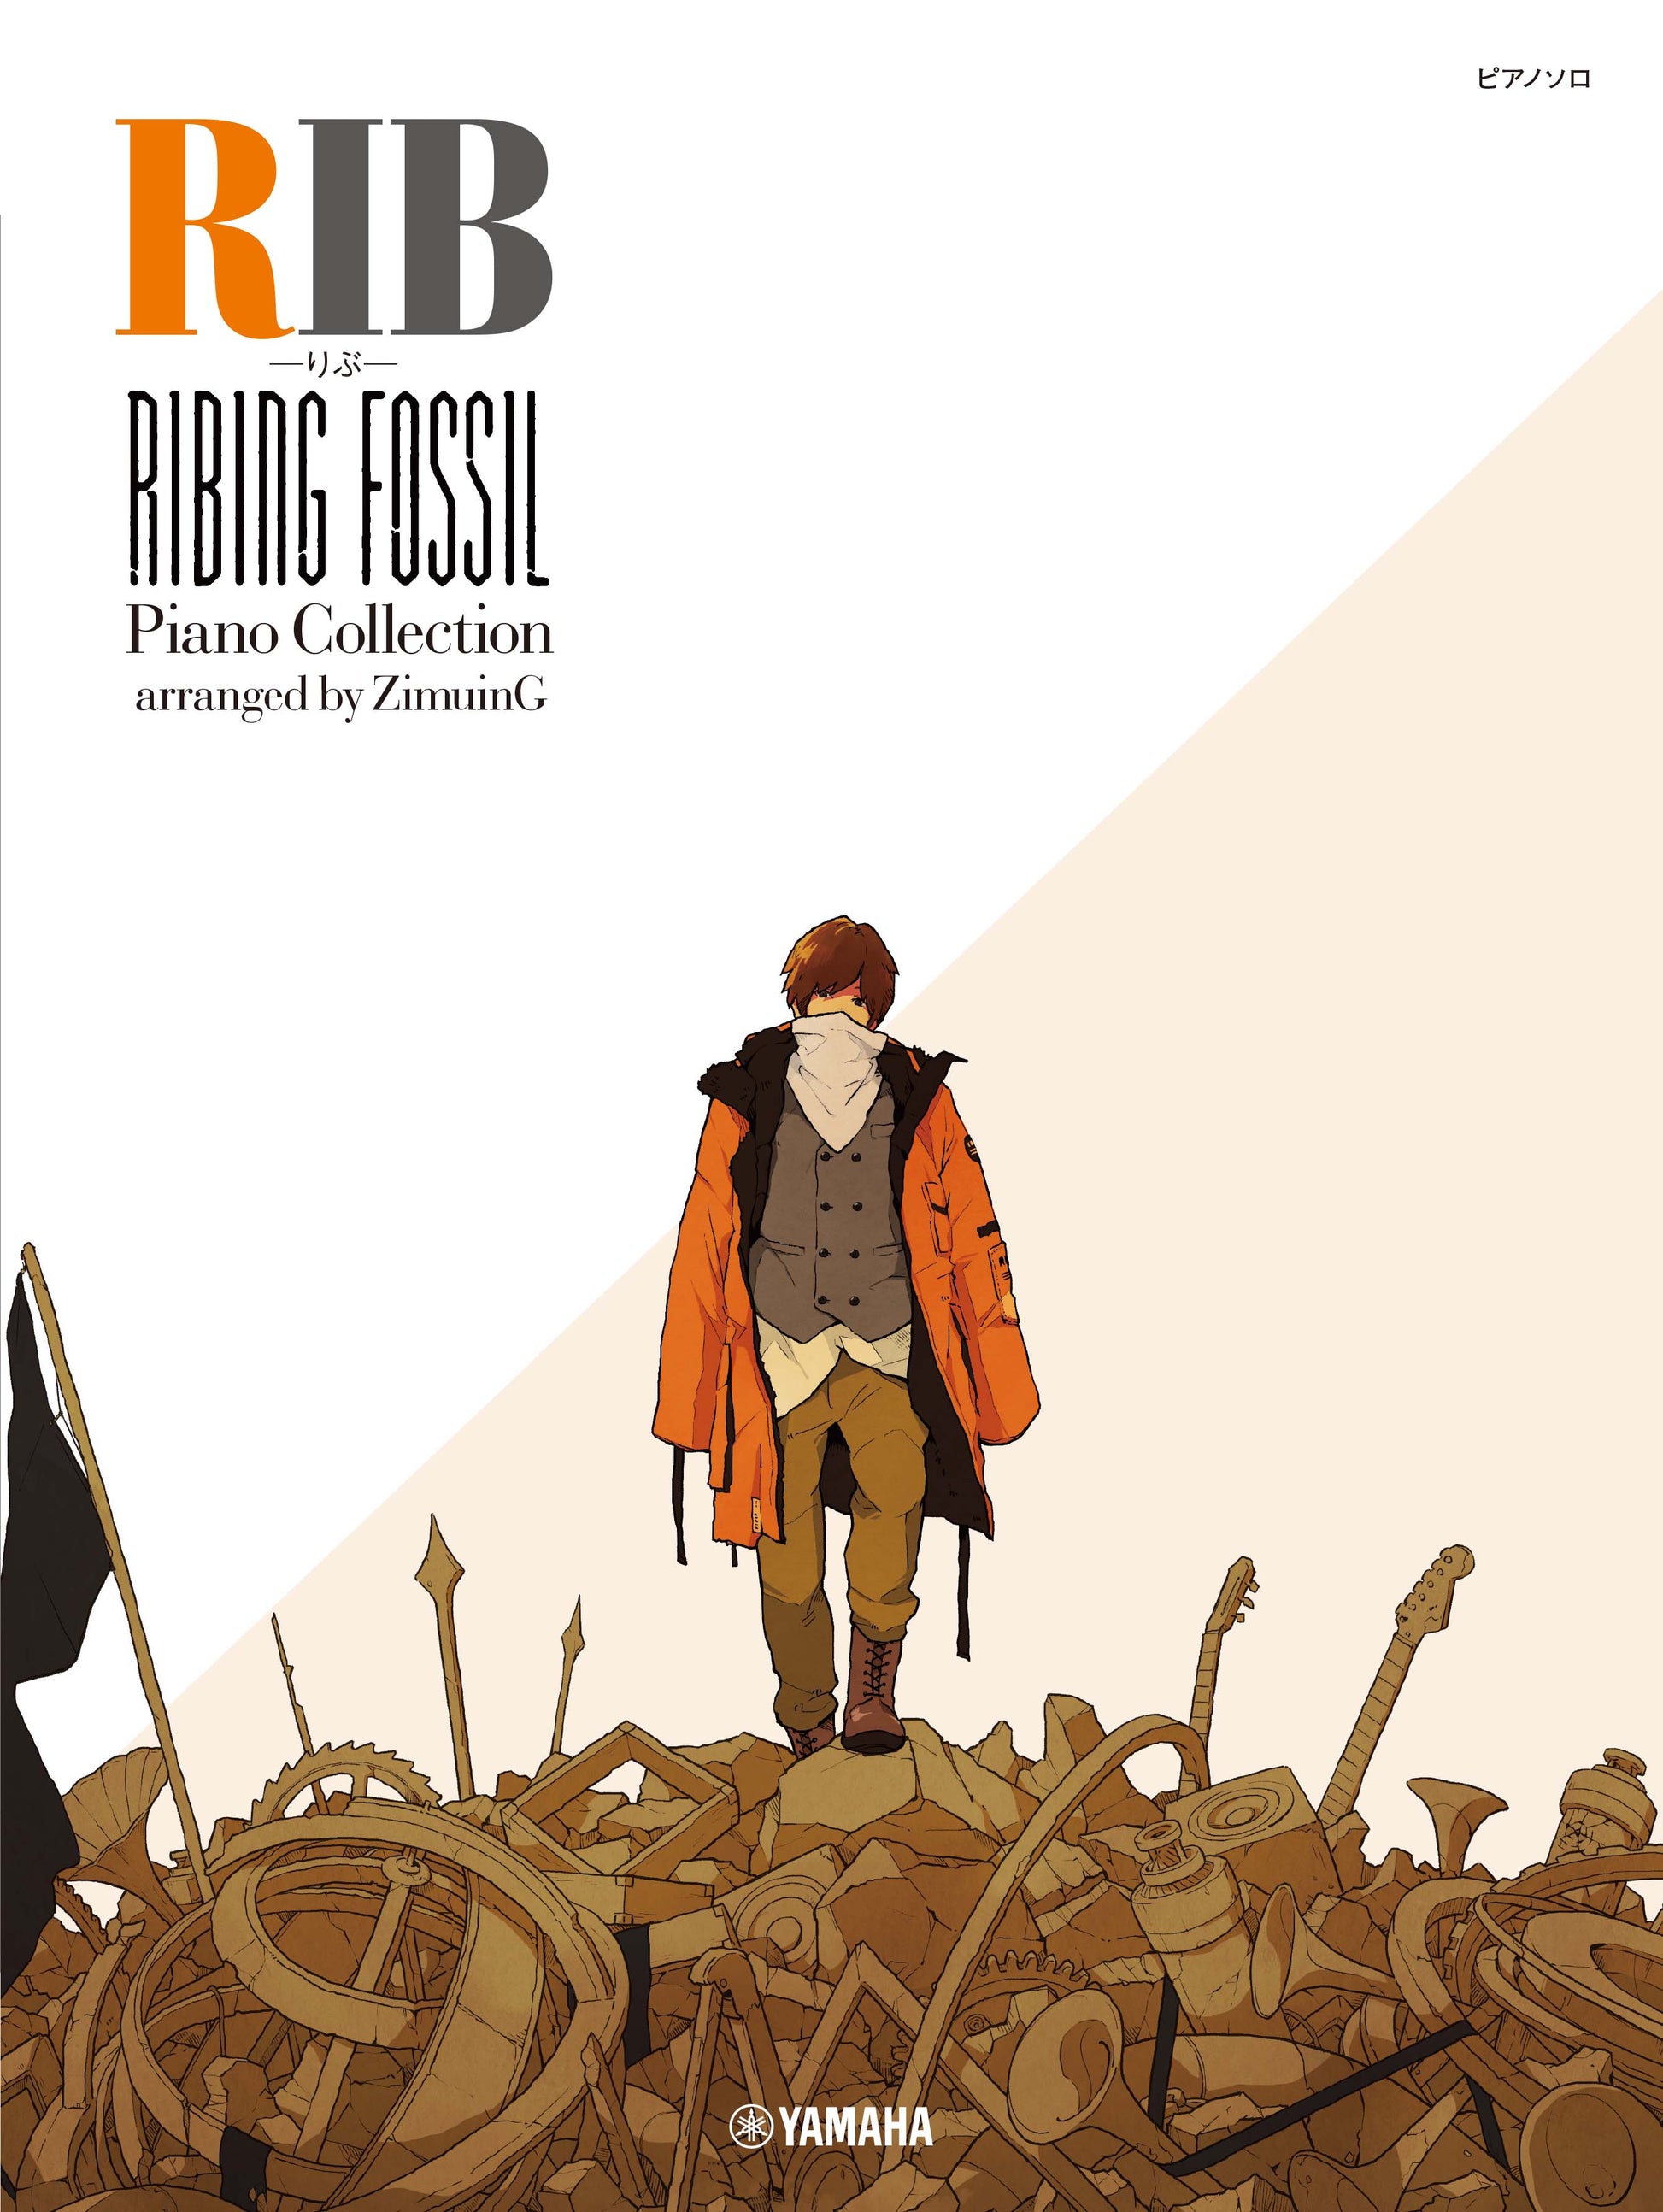 Ribu - Ribing fossil arranged by Gimin G / Piano Solo Sheet Music Book